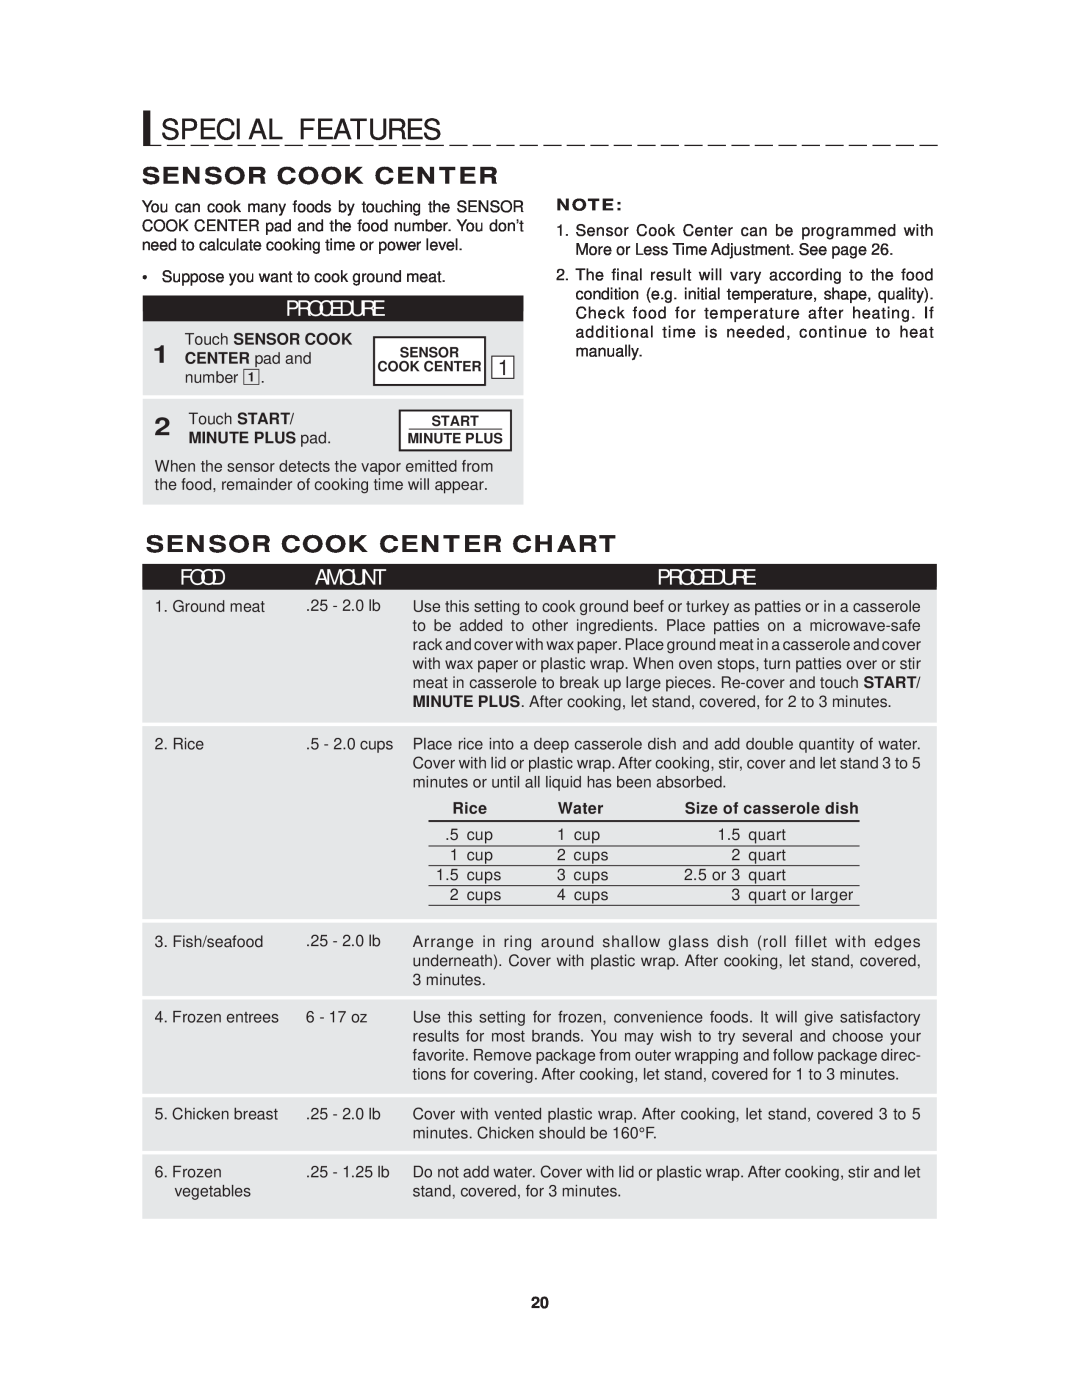 Sharp R-1214 Sensor Cook Center Chart, S P E C I A L F E A T U R E S, P R O C E D U R E, F O O D, Touch SENSOR COOK 